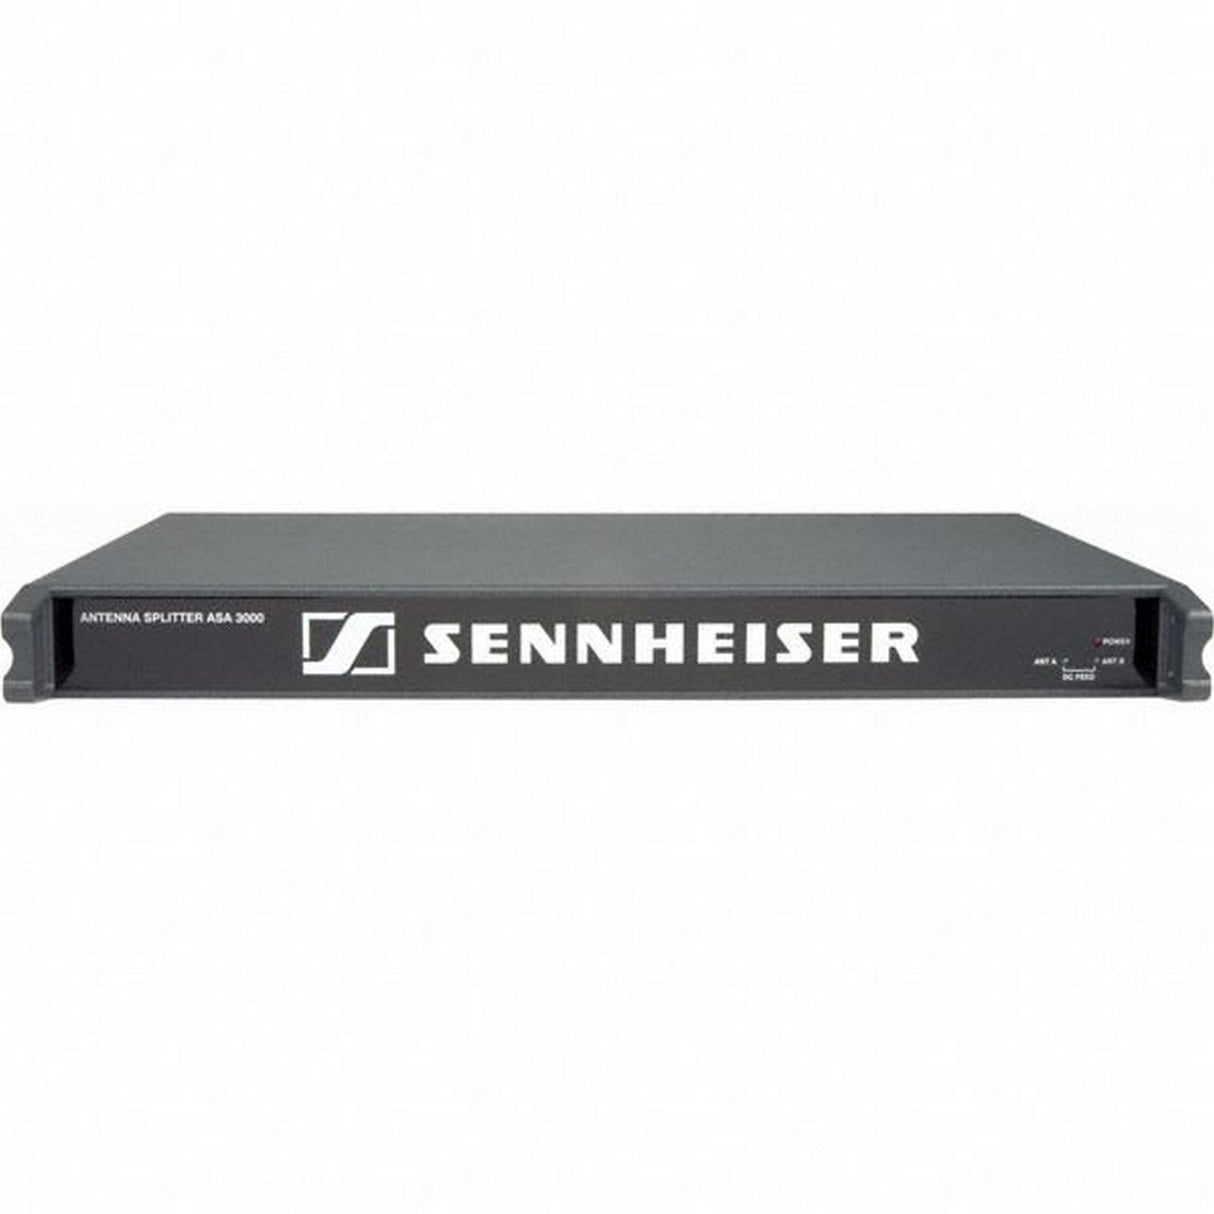 Sennheiser ASA 3000-US Active Wideband Antenna Splitter